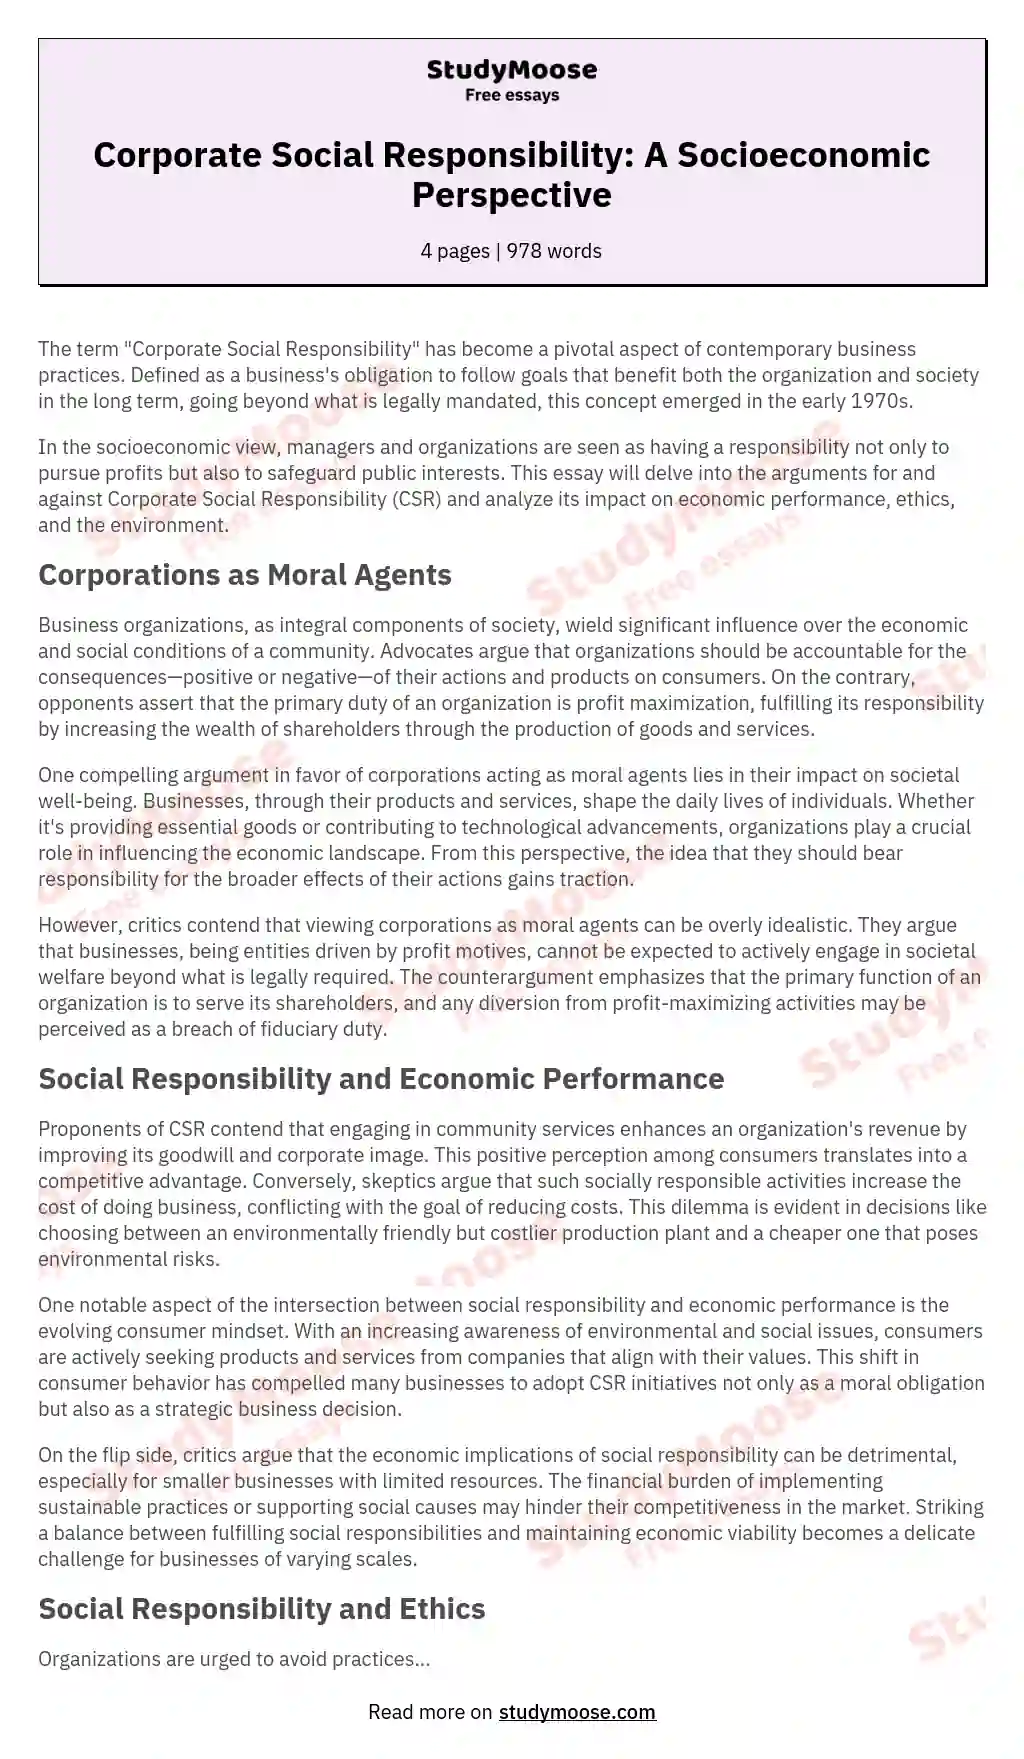 Corporate Social Responsibility: A Socioeconomic Perspective essay